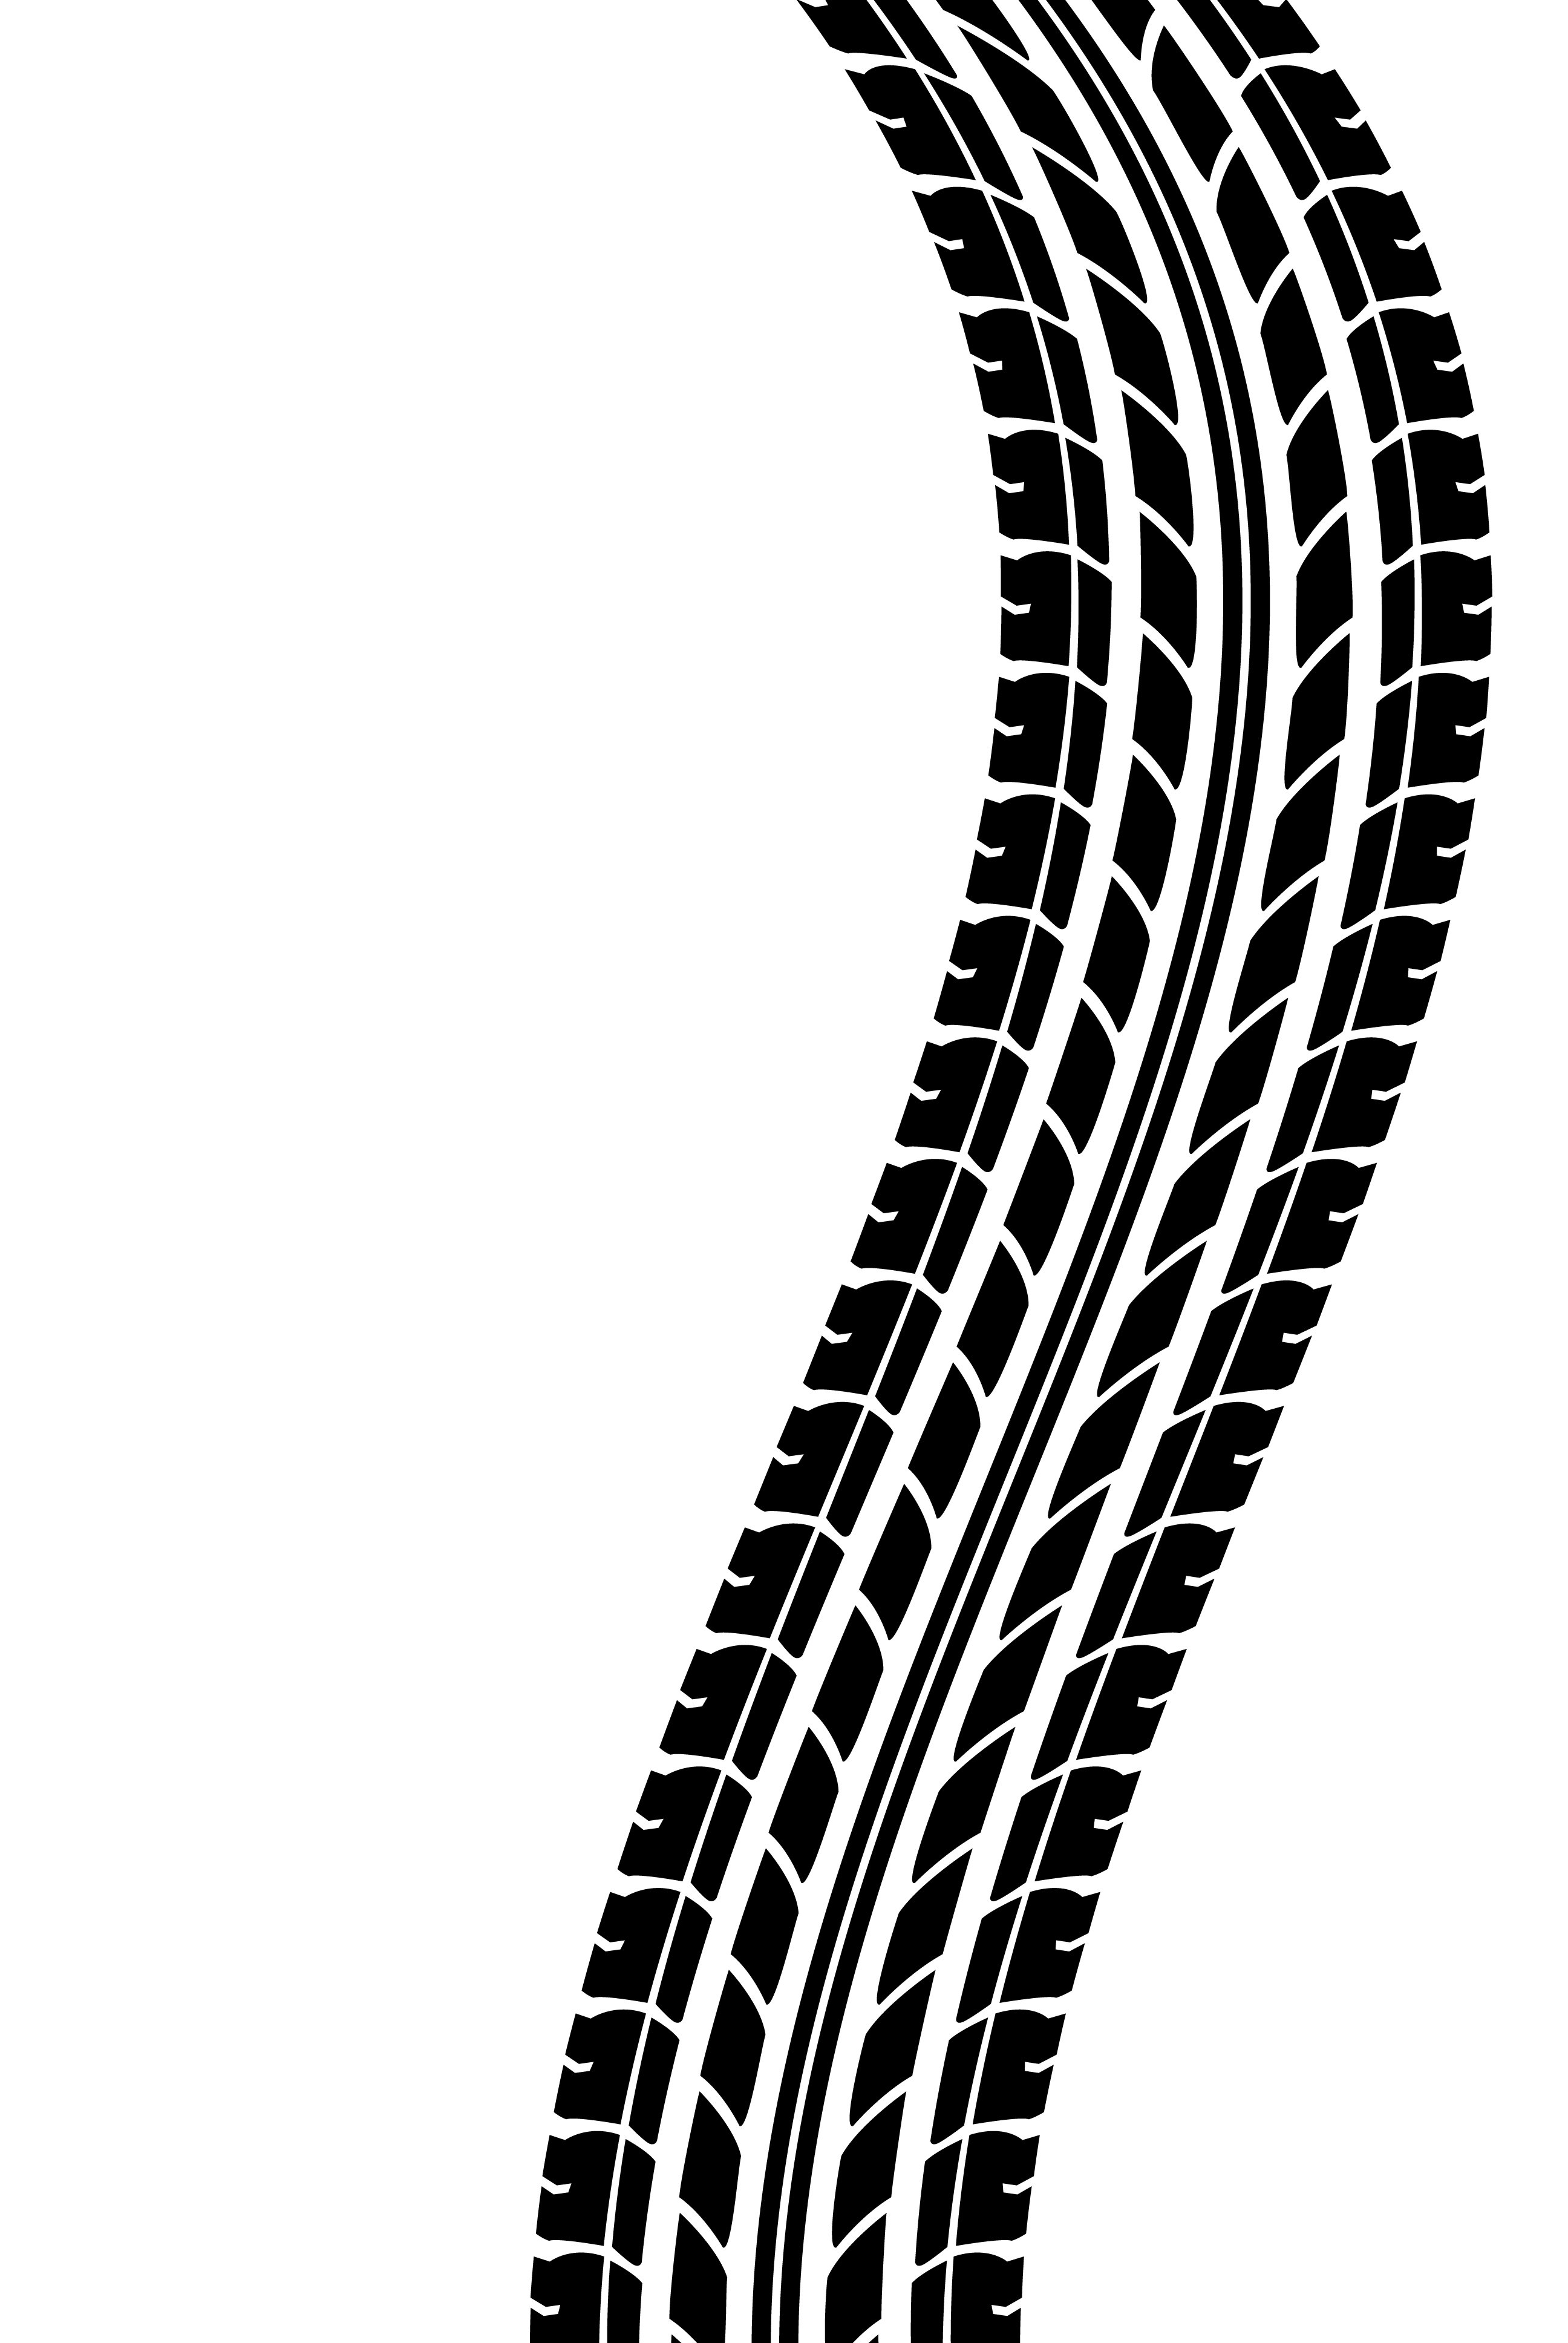 Tire tracks clipart